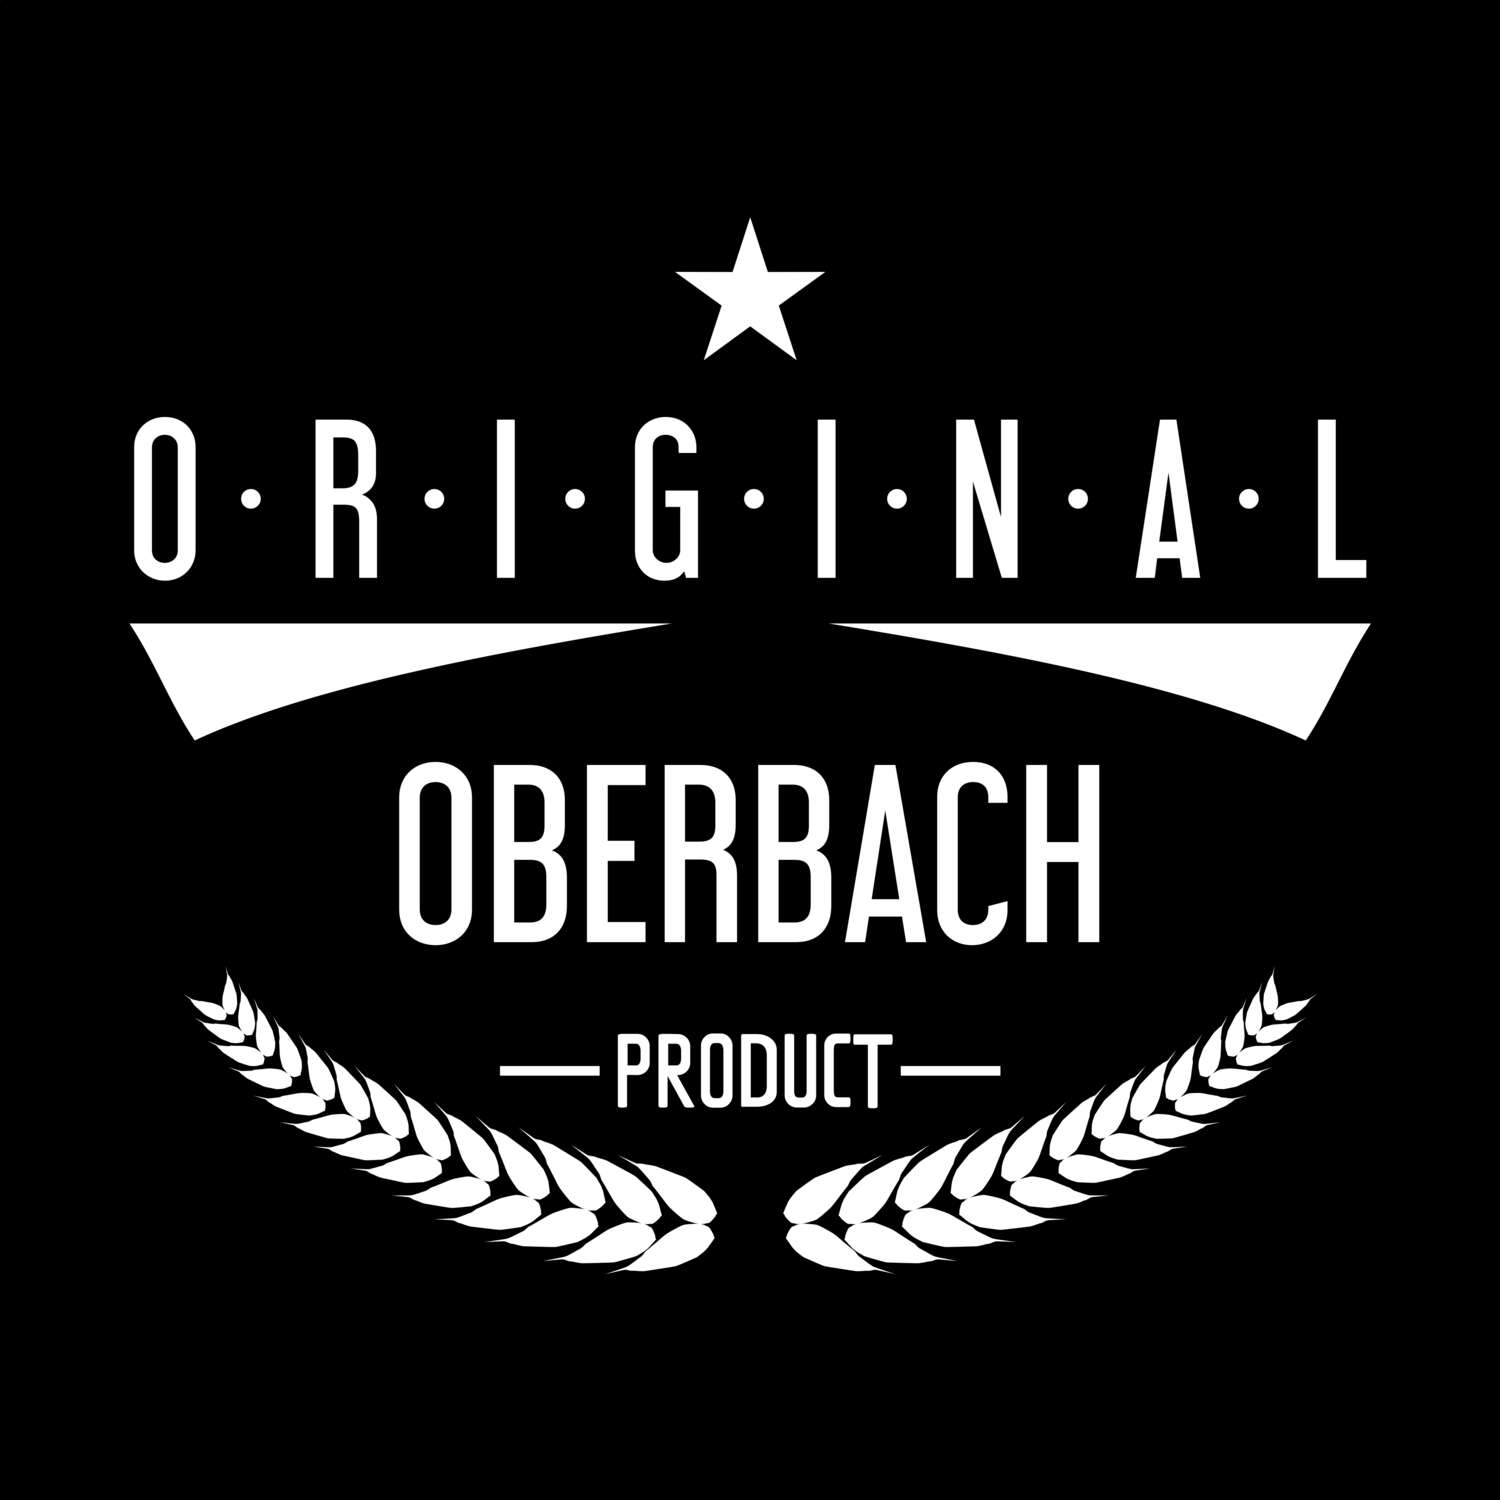 Oberbach T-Shirt »Original Product«